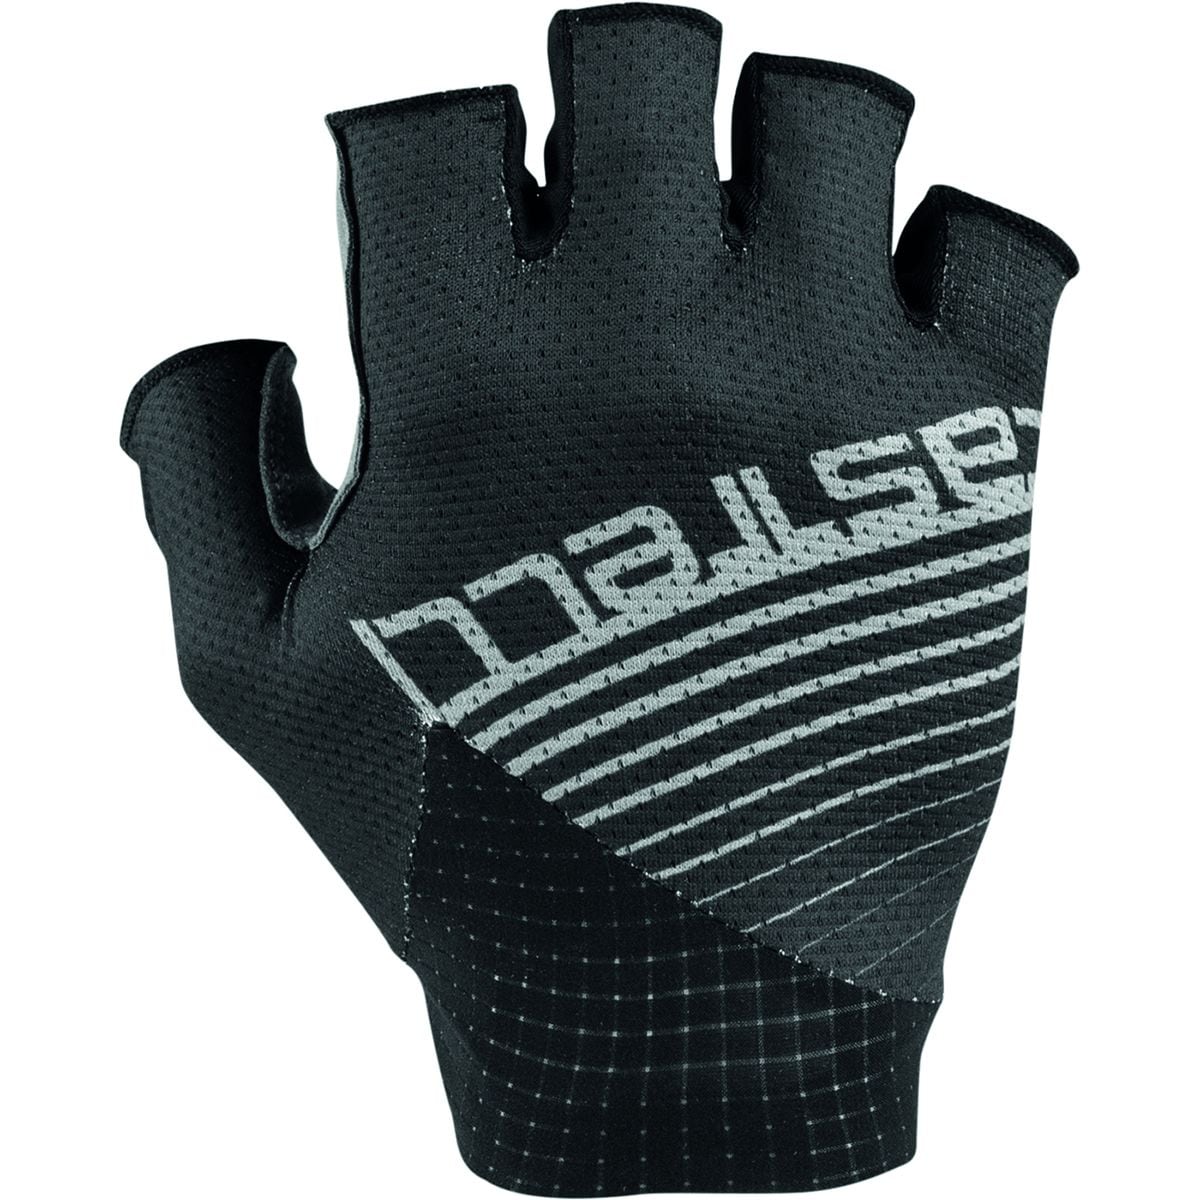 Castelli Competizione Glove - Men's Black, XS